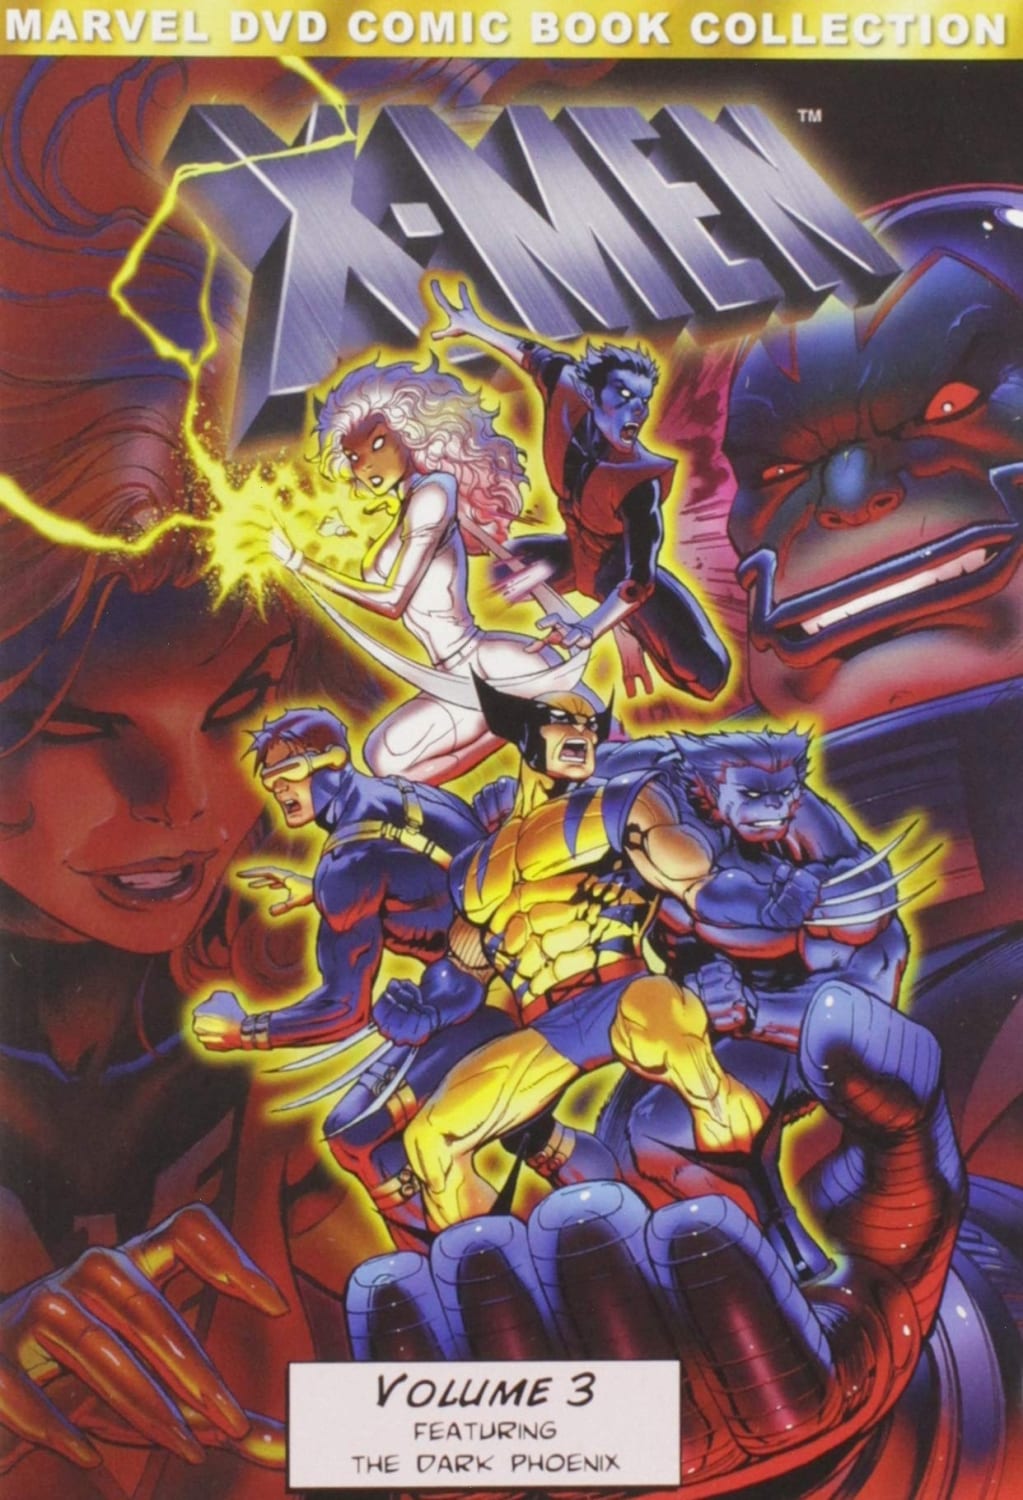 Marvel’s X-Men, Volume 3 – Featuring the Dark Phoenix (DVD) on MovieShack